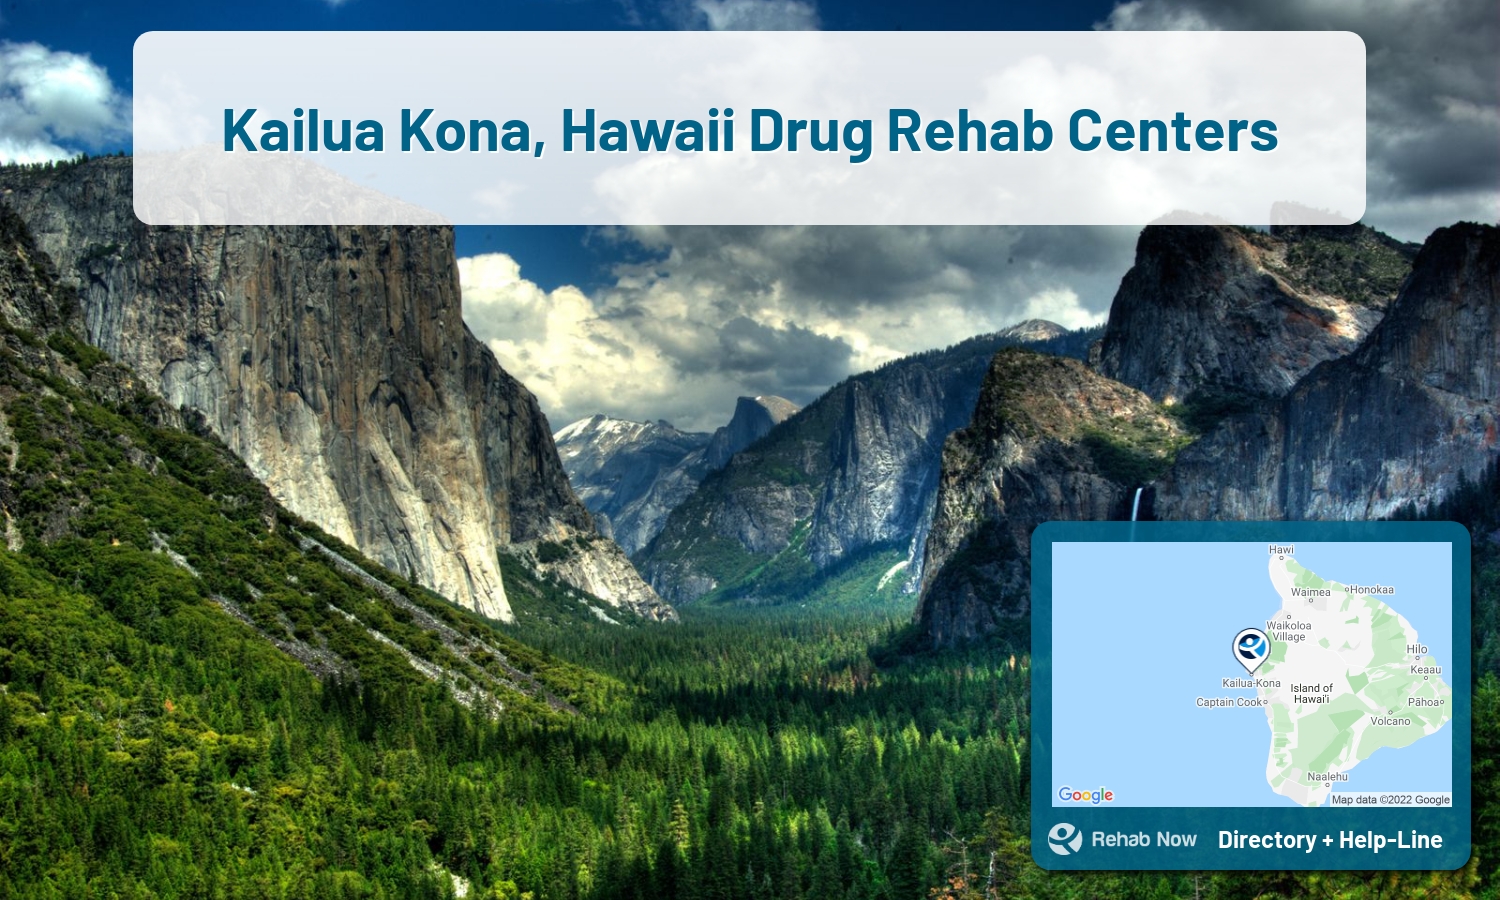 Kailua Kona, HI Treatment Centers. Find drug rehab in Kailua Kona, Hawaii, or detox and treatment programs. Get the right help now!